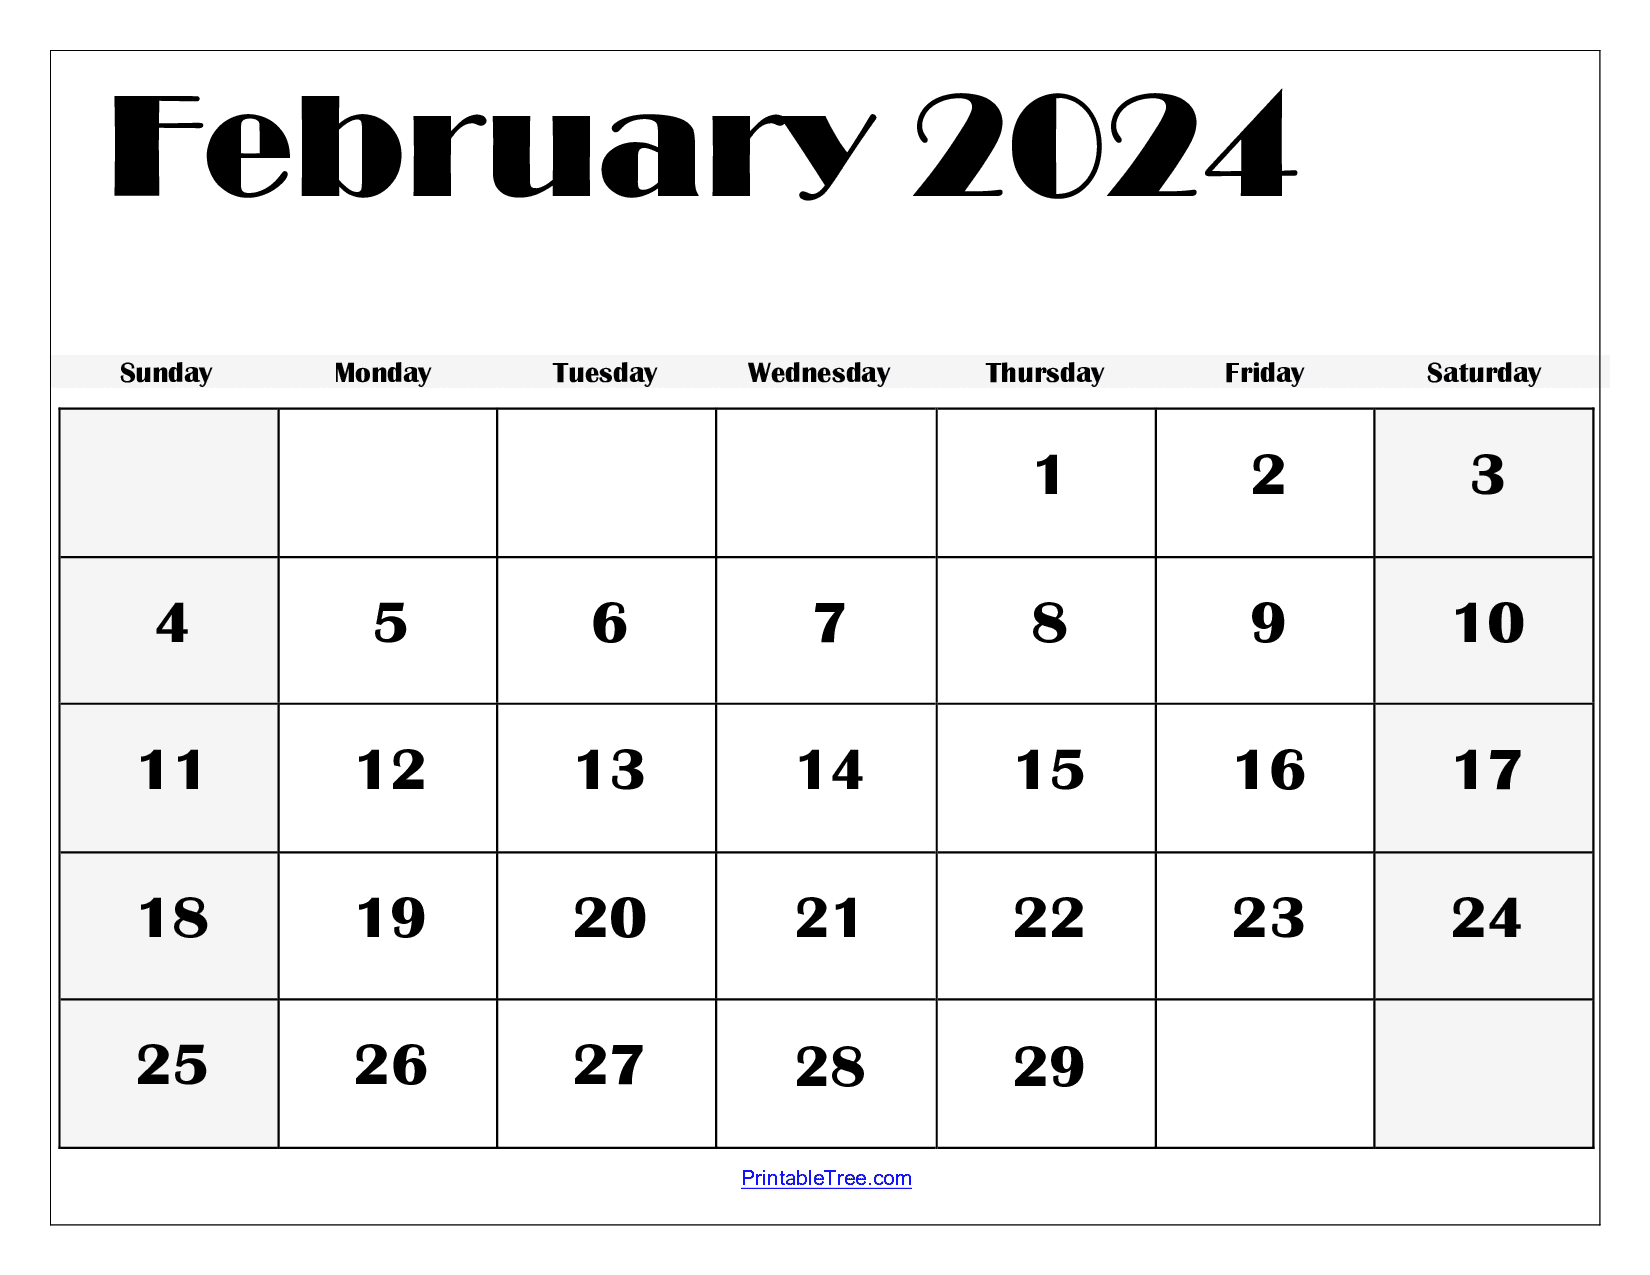 February 2024 Calendar Printable Pdf Template With Holidays for Blank February Calendar 2024 Printable